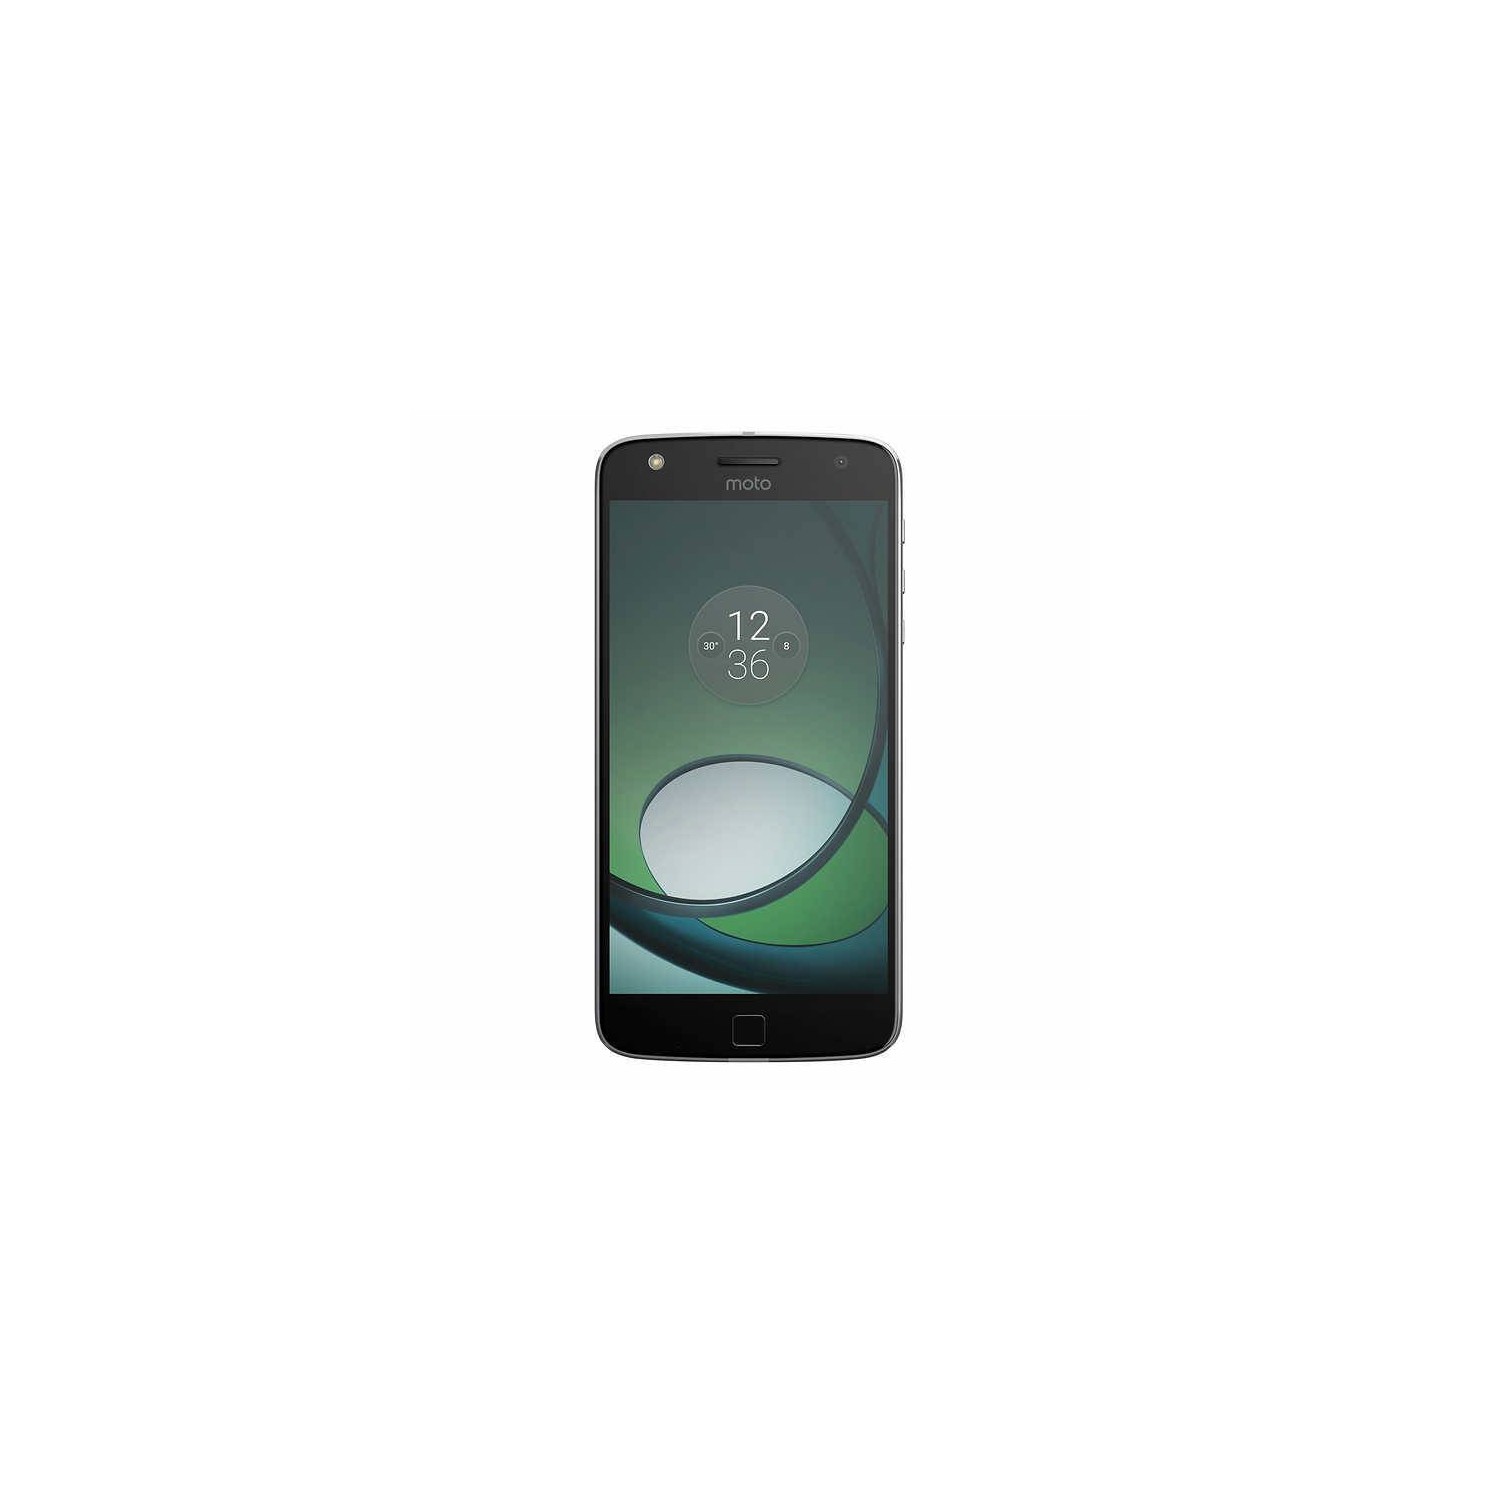 Motorola Moto Z Play Smartphone / XT1635-02 / Black / 5.5 in. 1080p Super AMOLED / 16MP / 32GB - Open Box